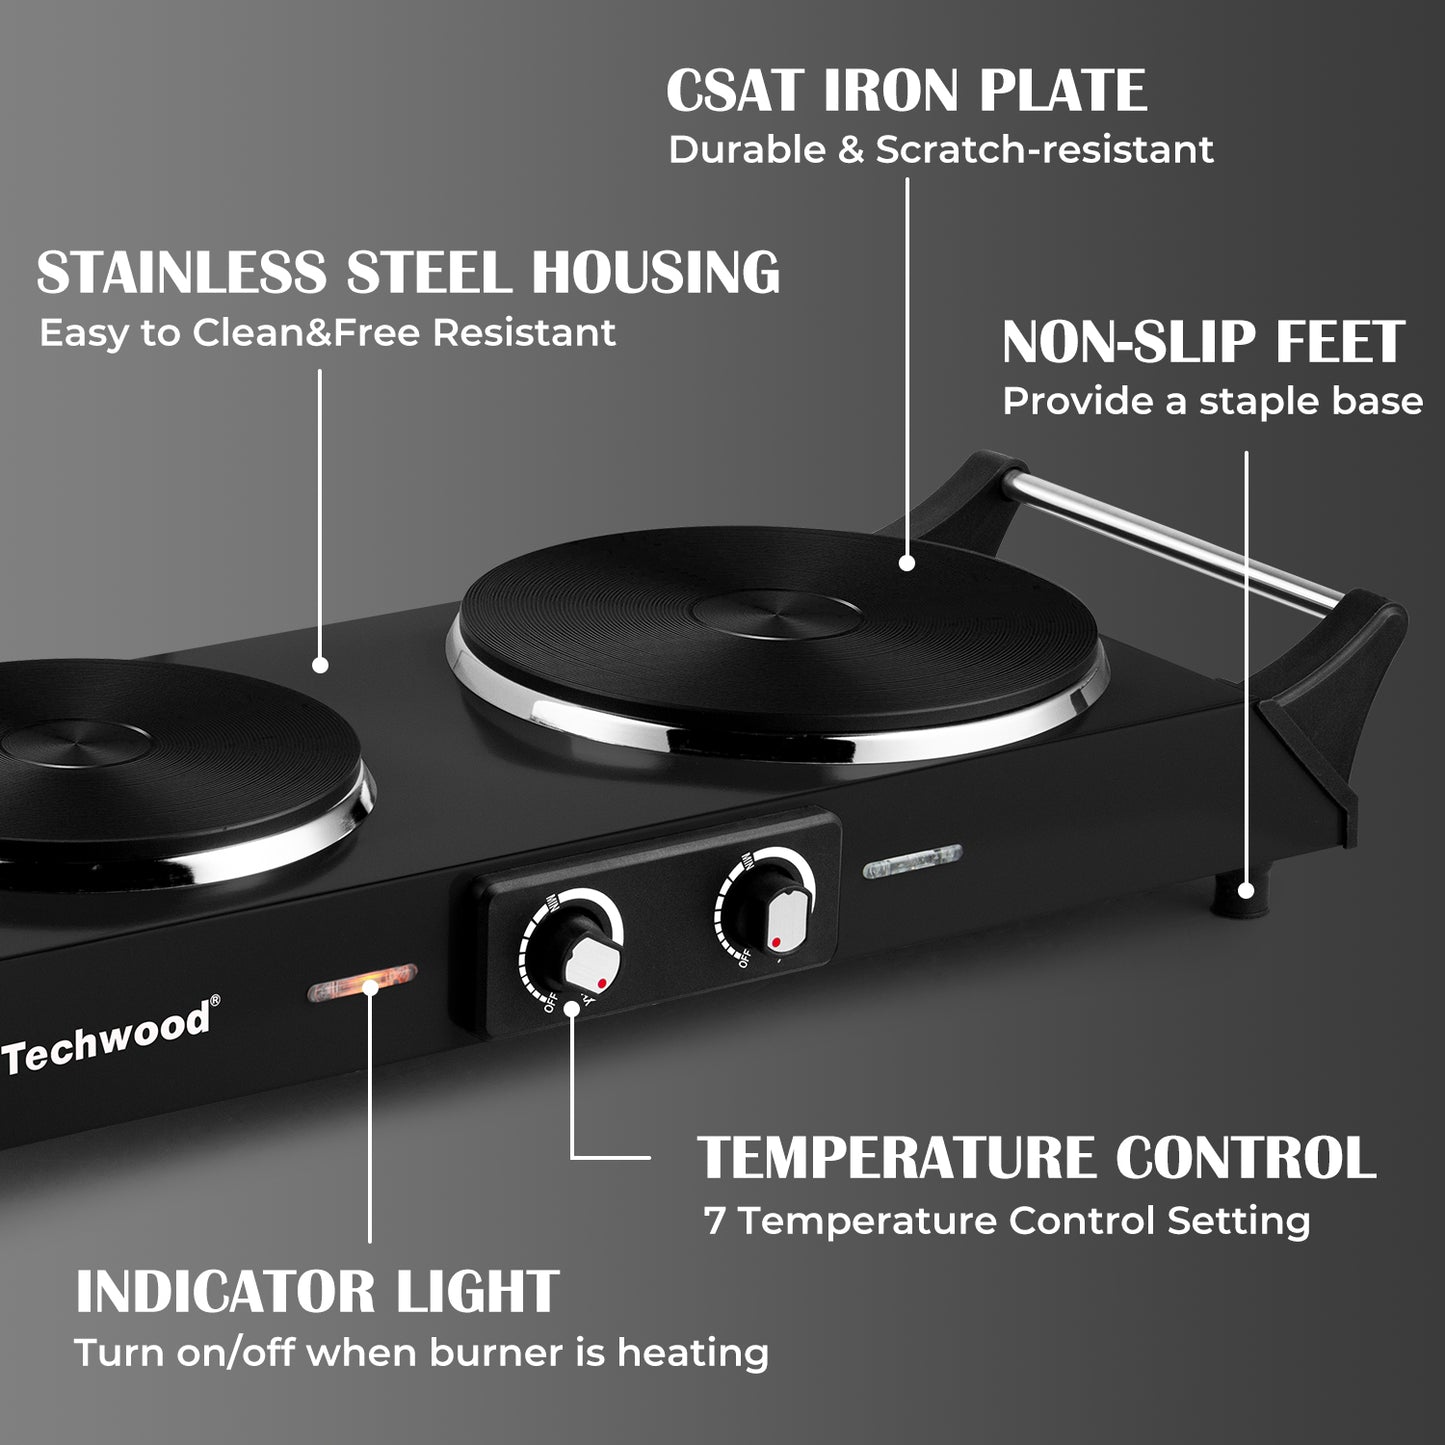 durable single burner stainless steel hot